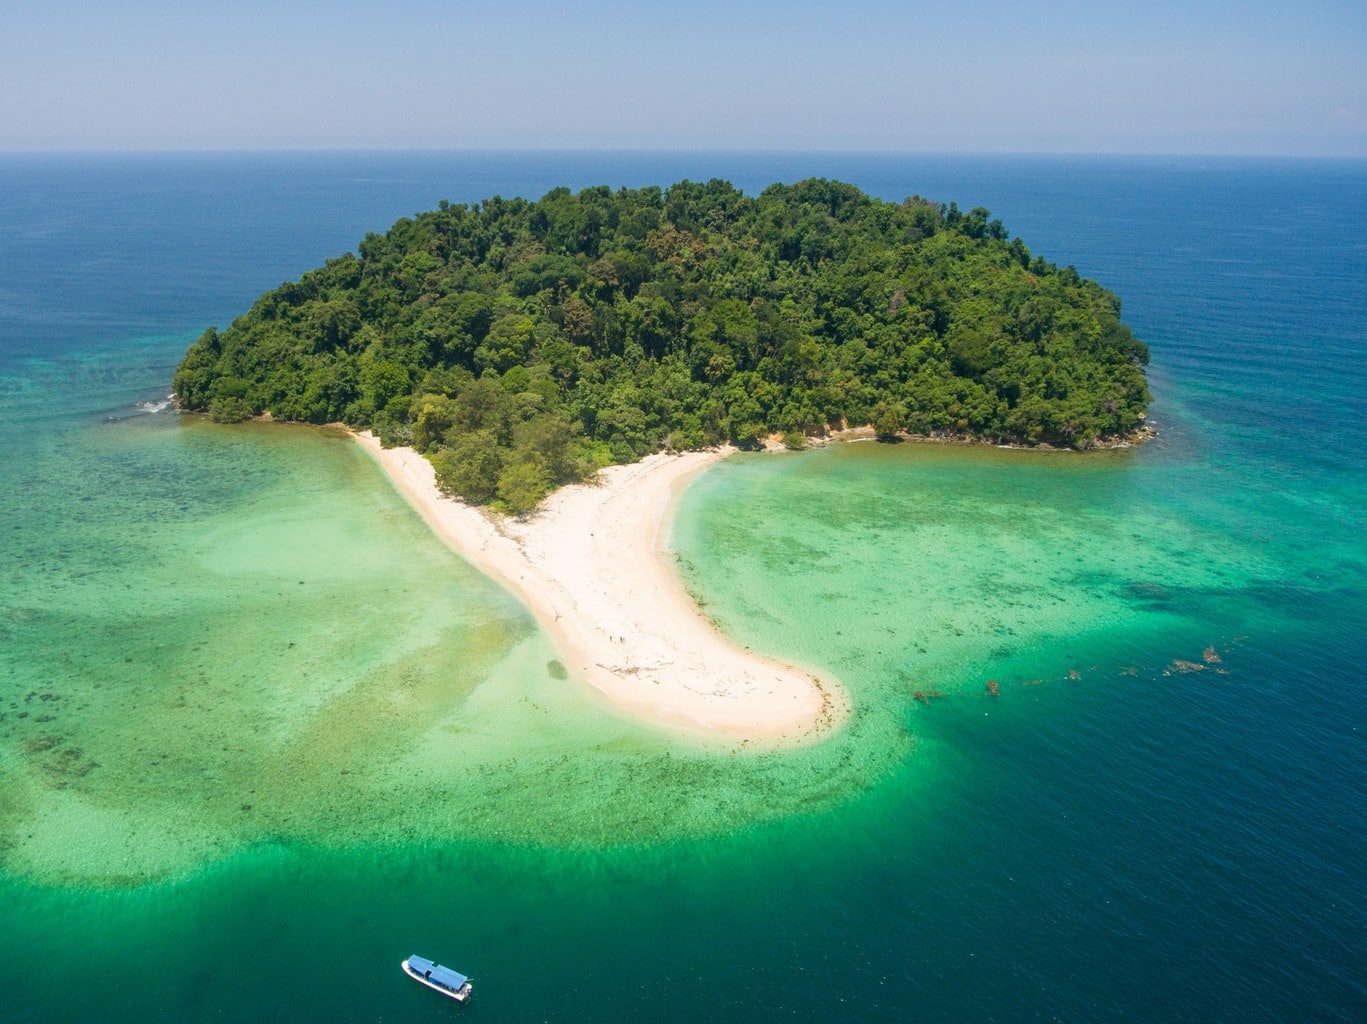 Manukan Island from the sky